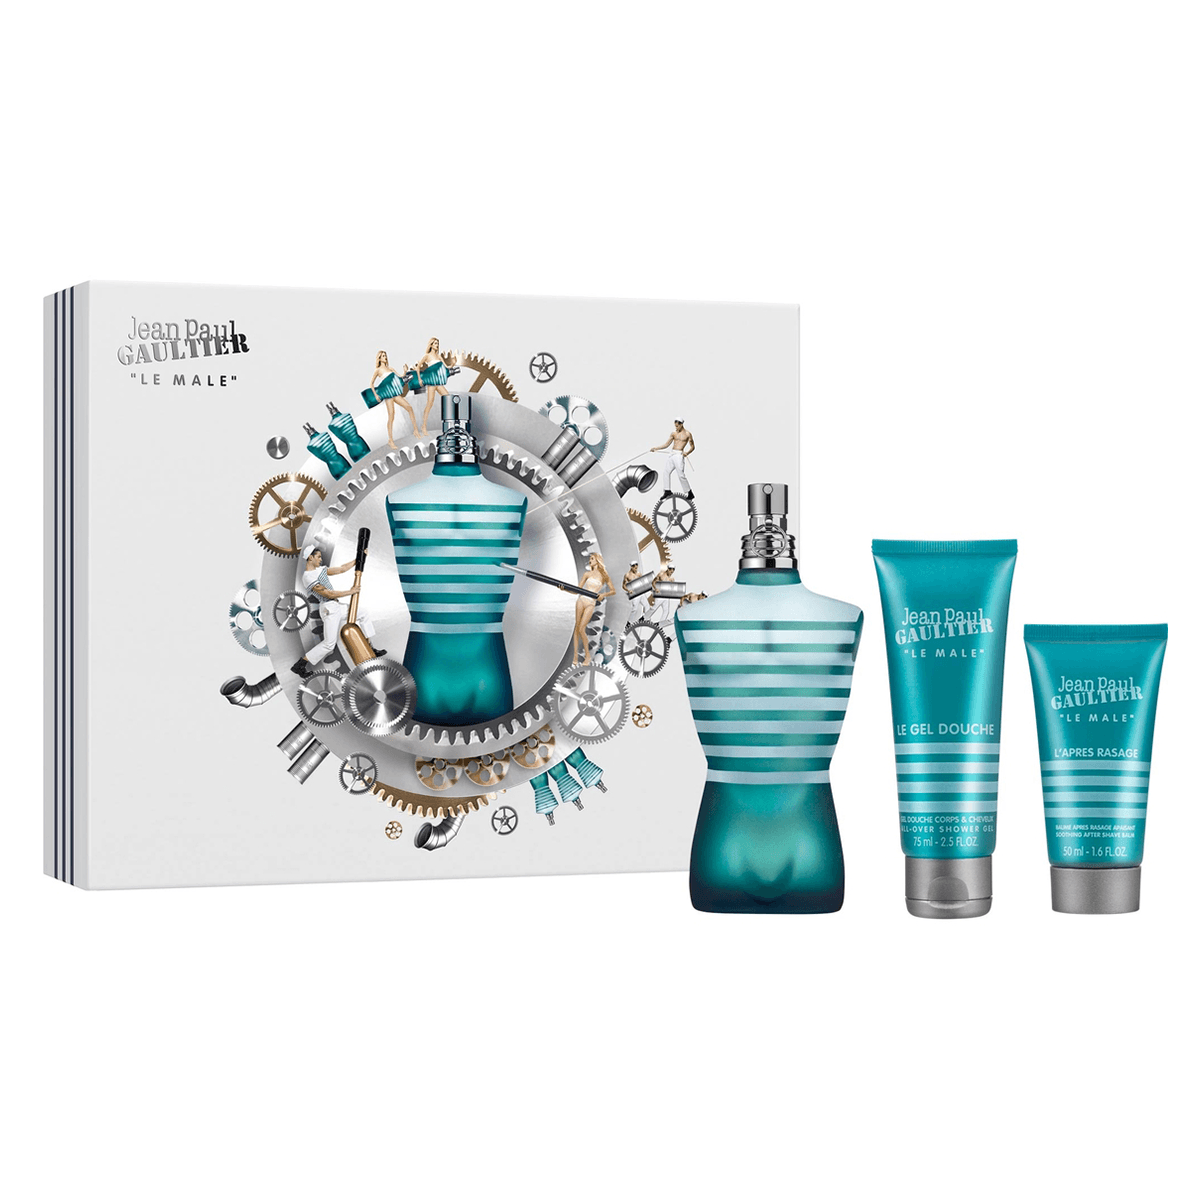 Jean Paul Gaultier "Le Male" Gift Set - My Perfume Shop Australia